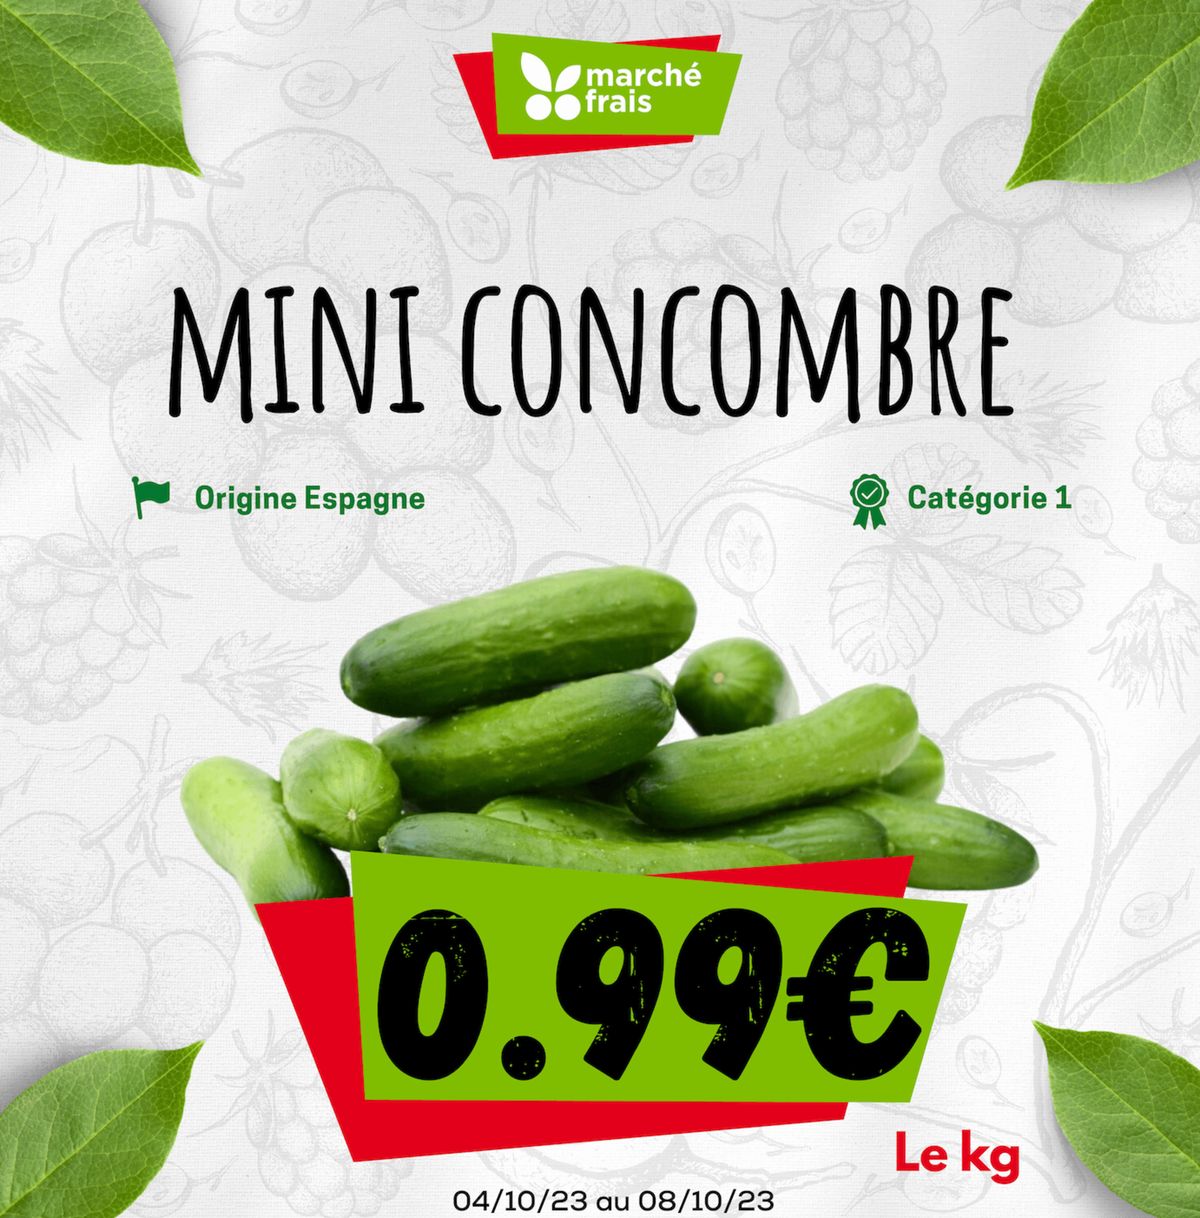 Catalogue Mini concombre, page 00001